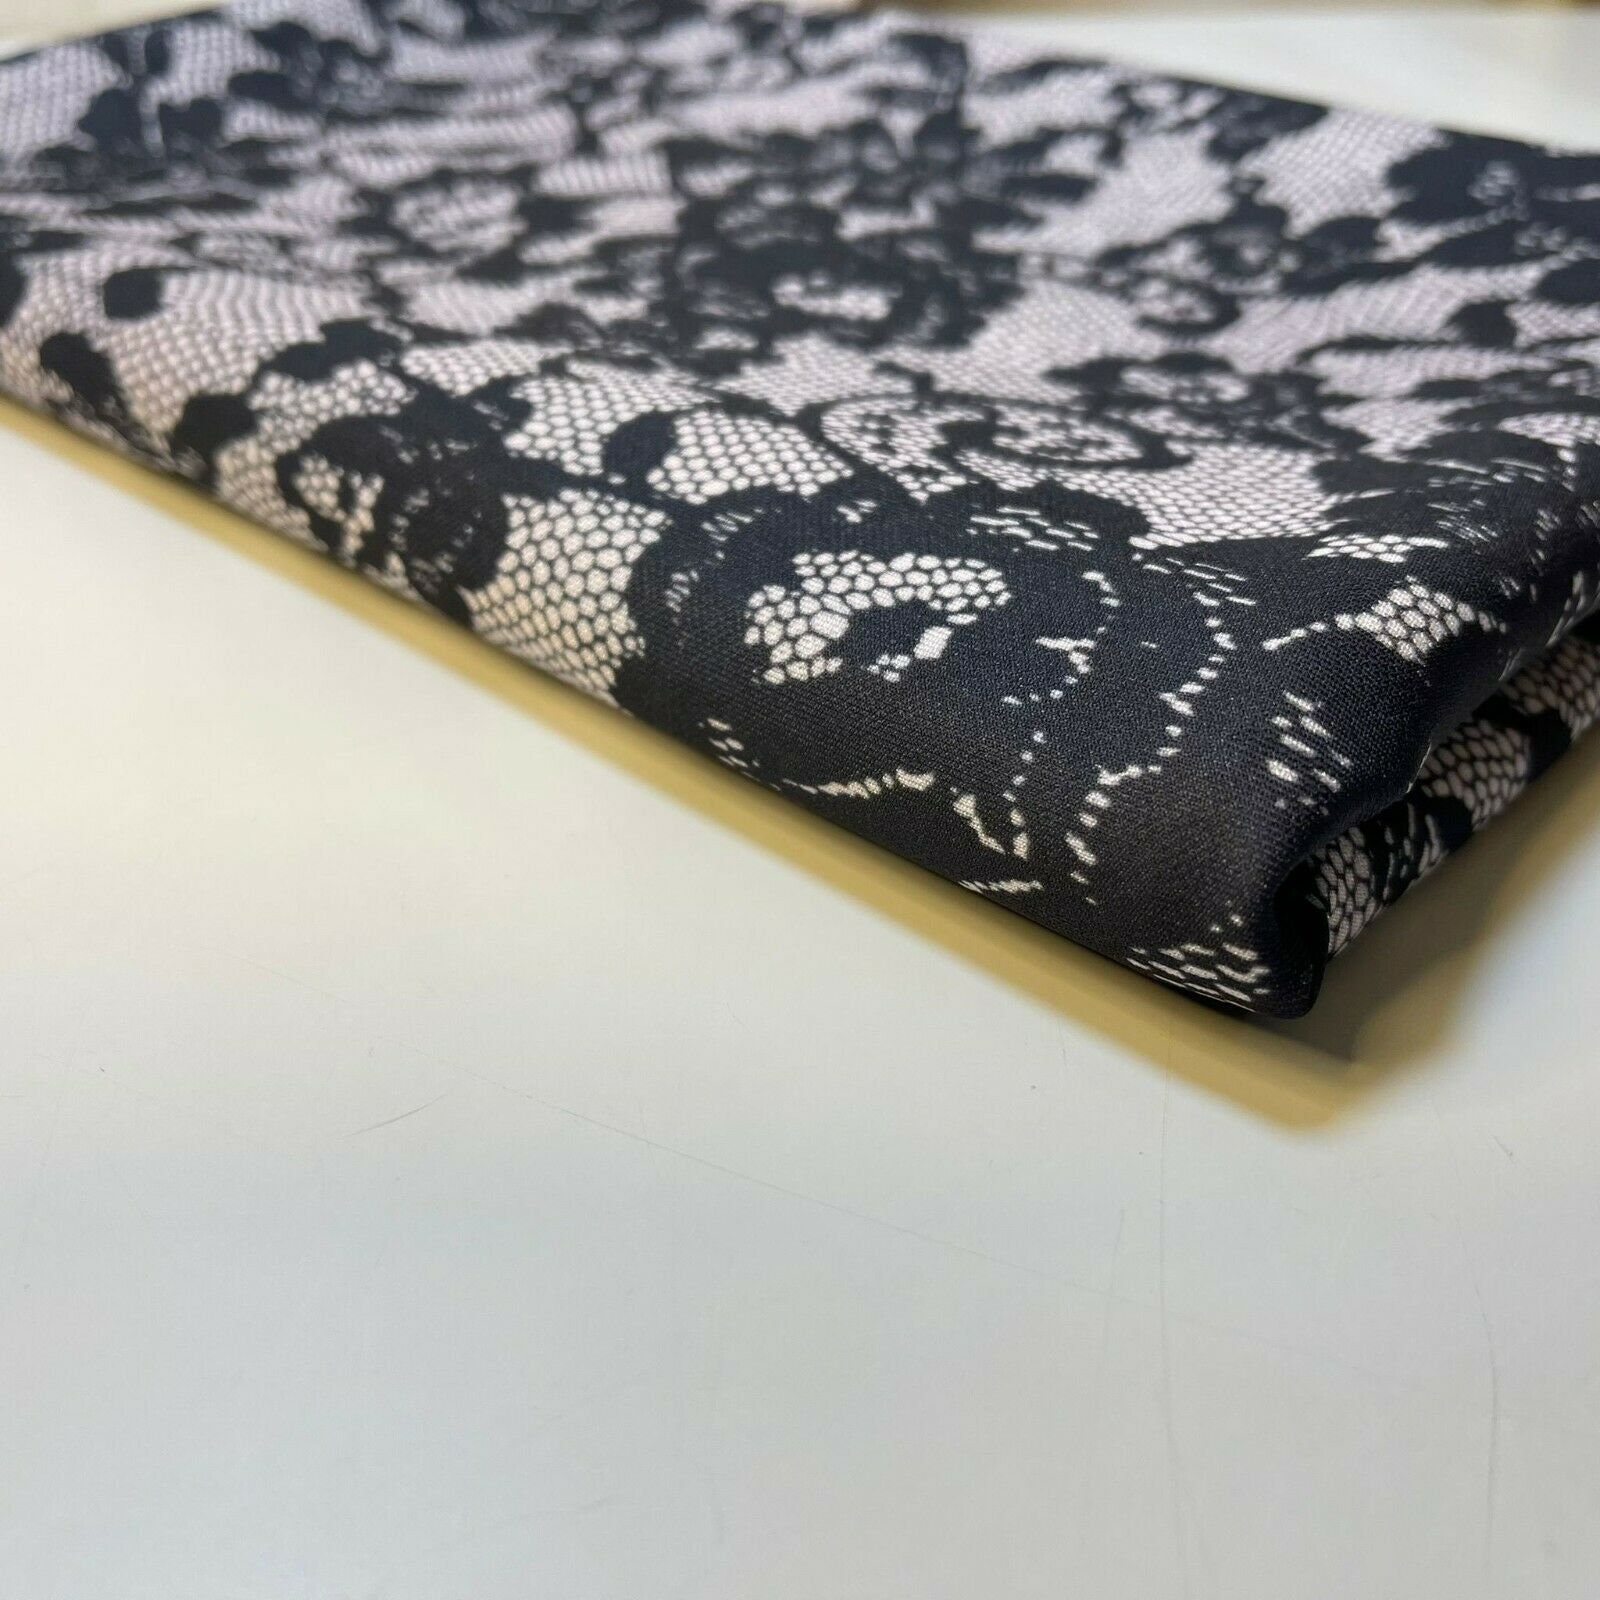 Silky Satin Floral Leopard Vintage Print Dress Craft Fabric Material 58" Meter